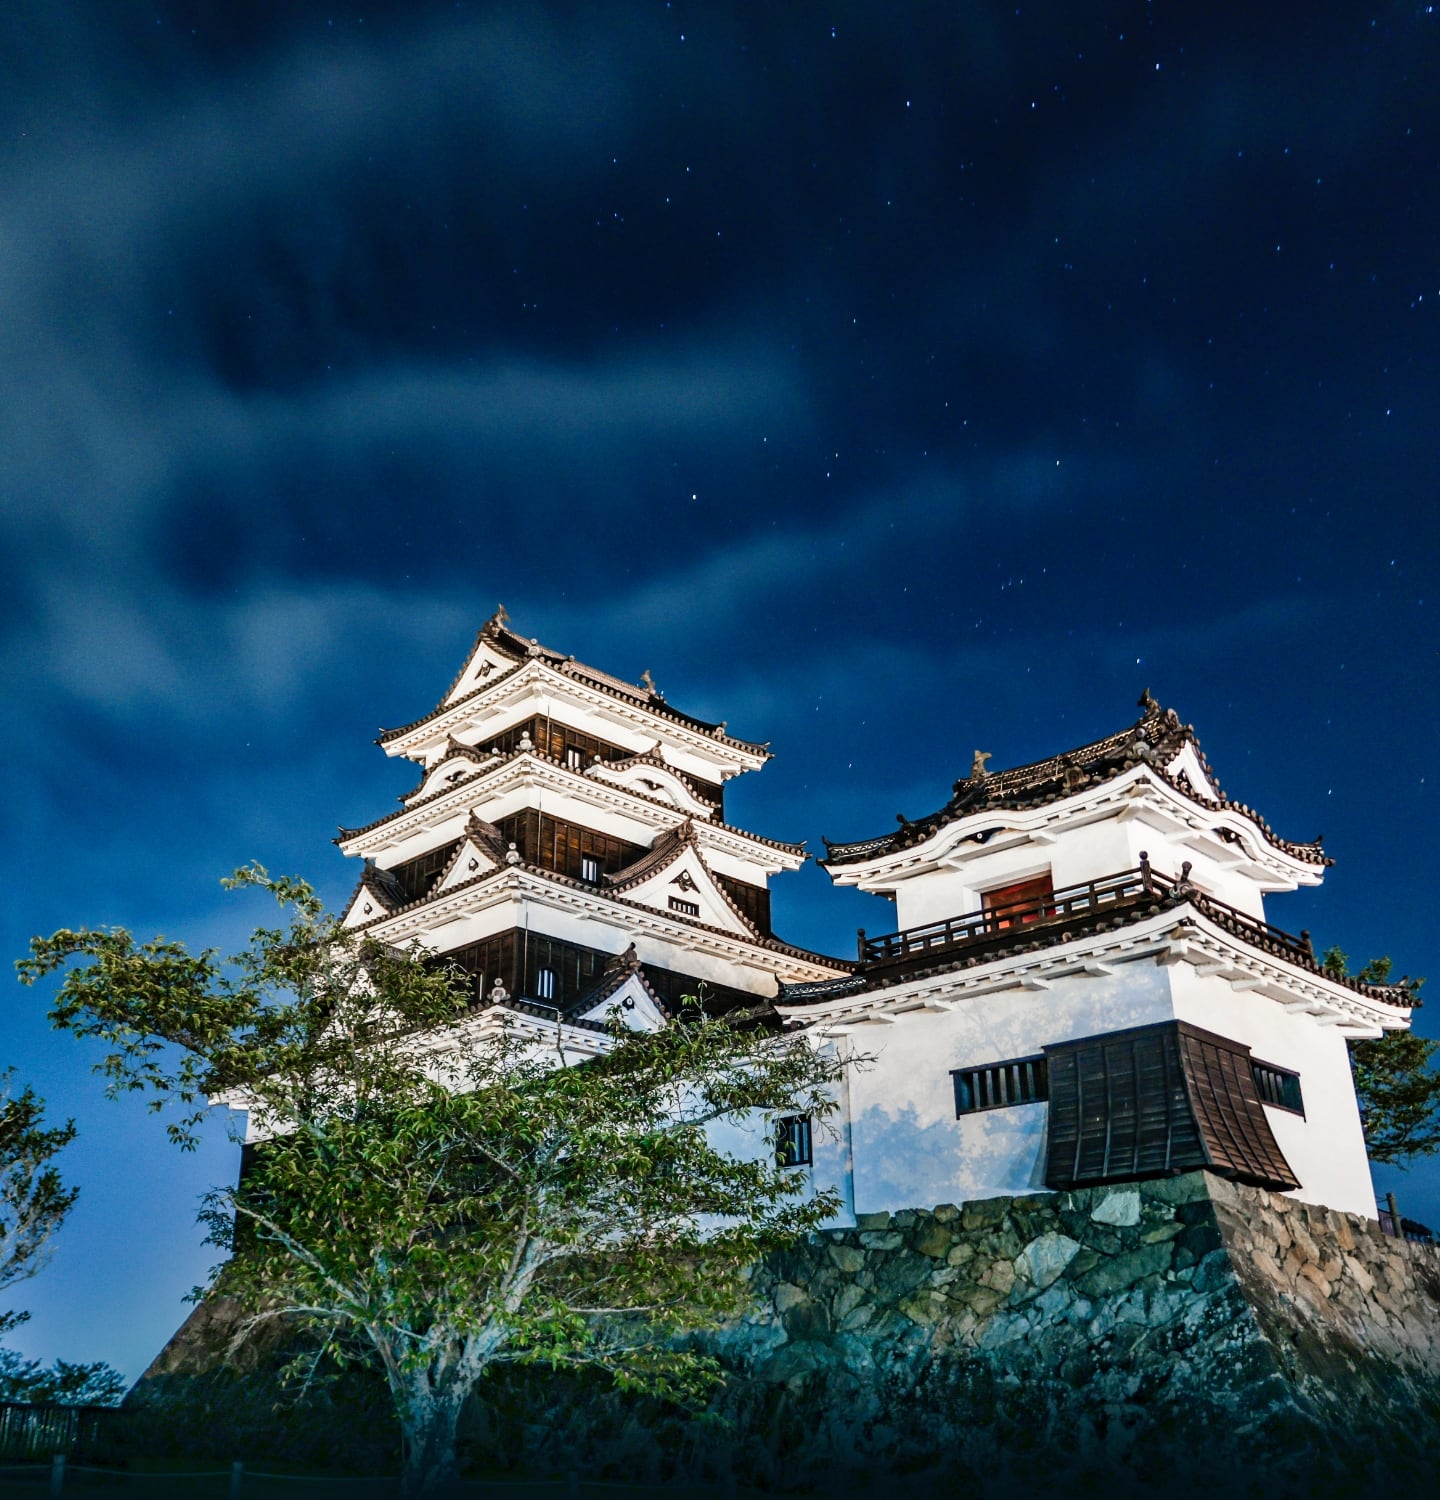 migakiba ozuのイメージ写真。夜空にライトアップされた復元された四層四階の複連結式天守の大洲城の様子が写っています。